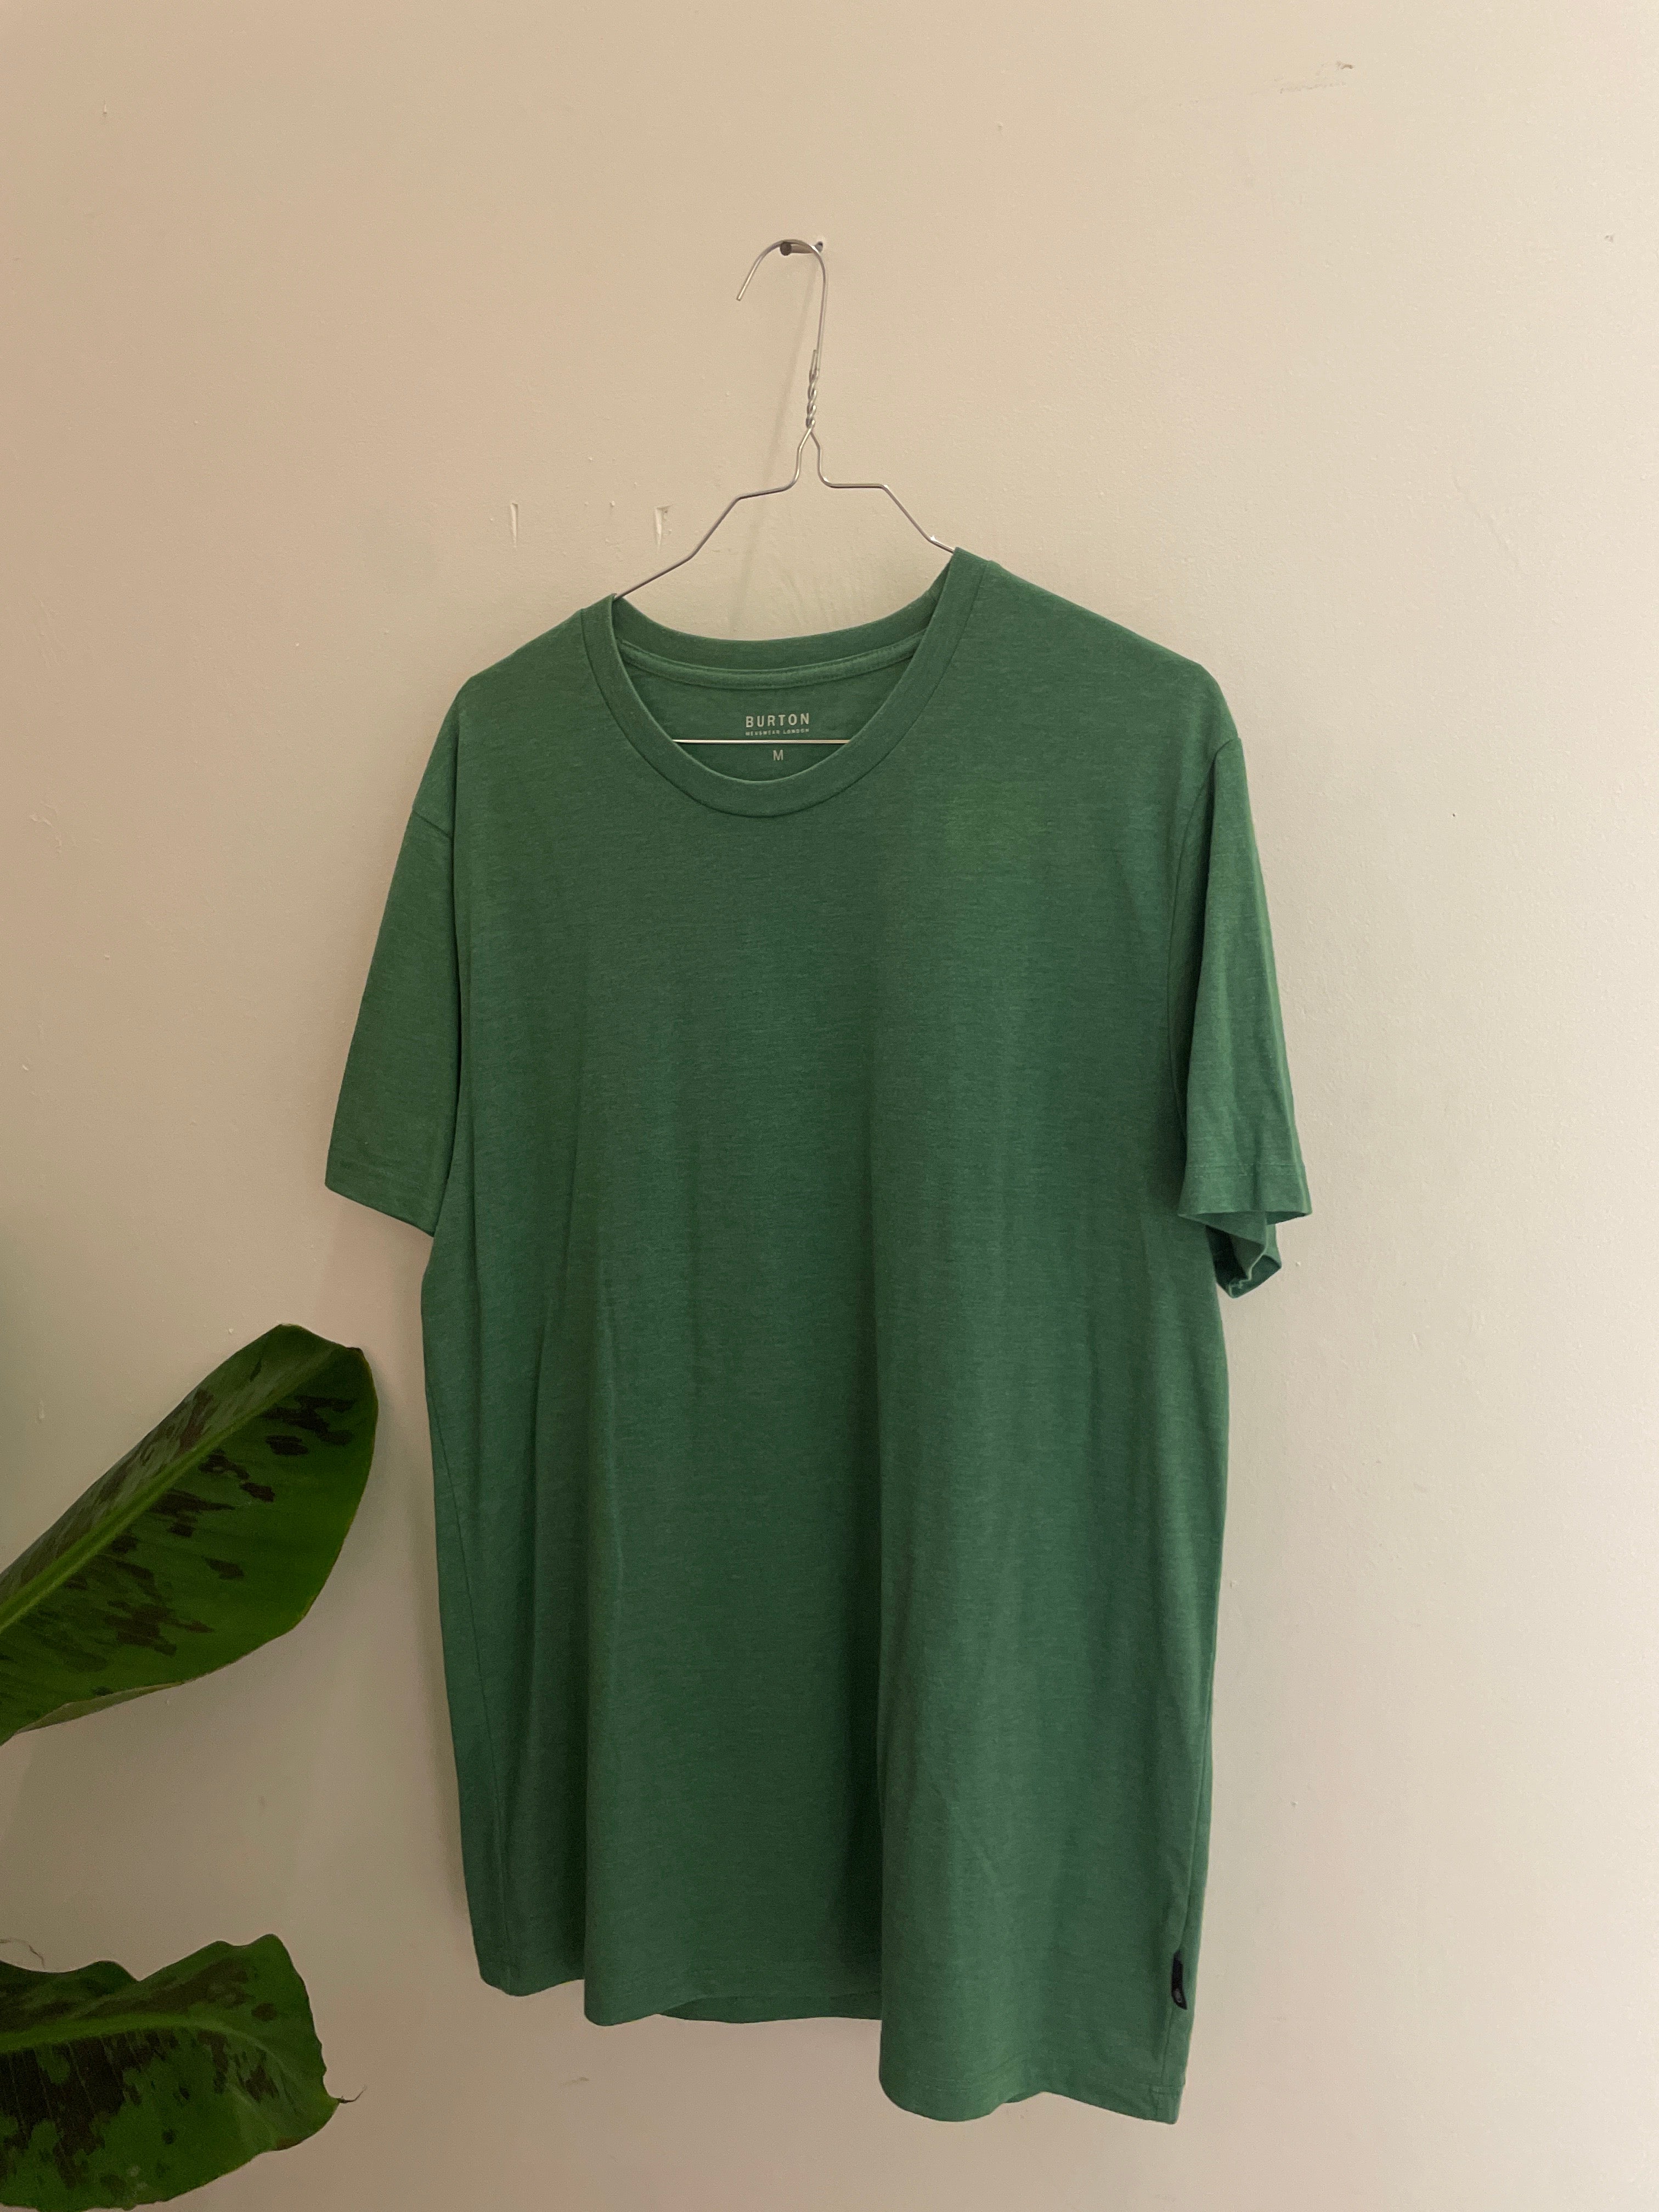 Vintage burton green plain medium classic tshirt